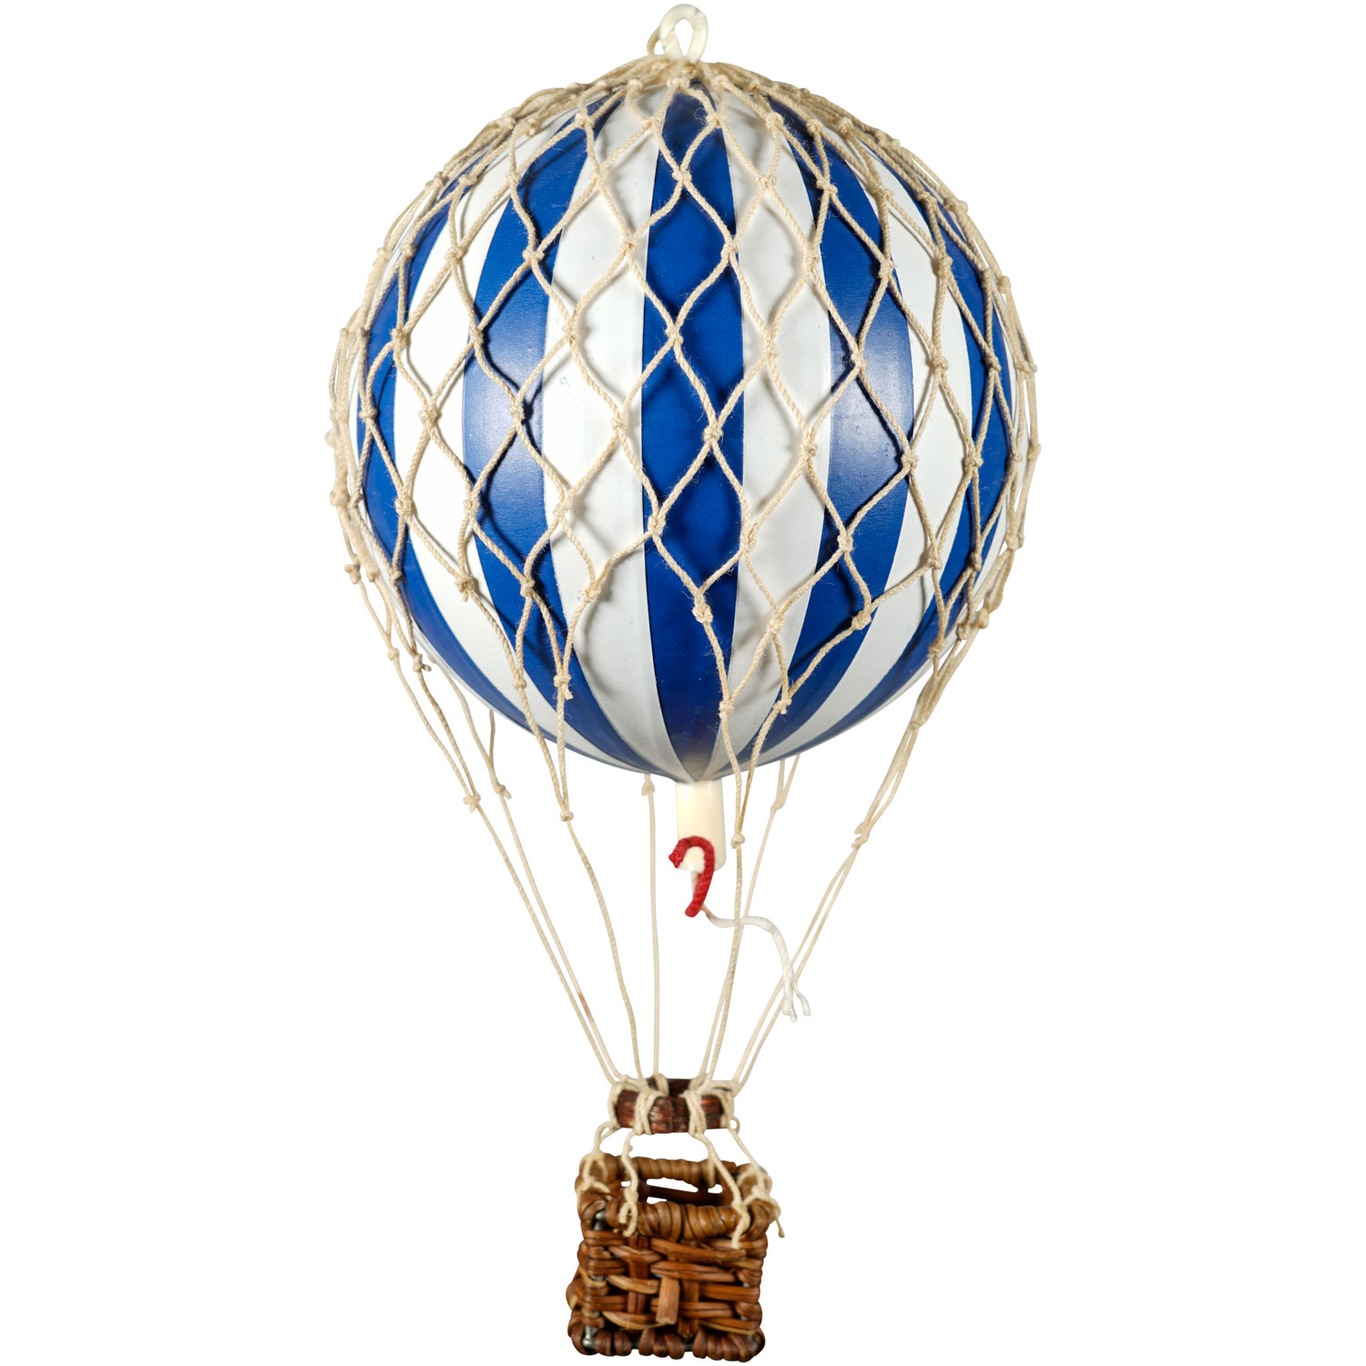 Floating The Skies Heißluftballon 13x8.5 cm, Blau / Weiß